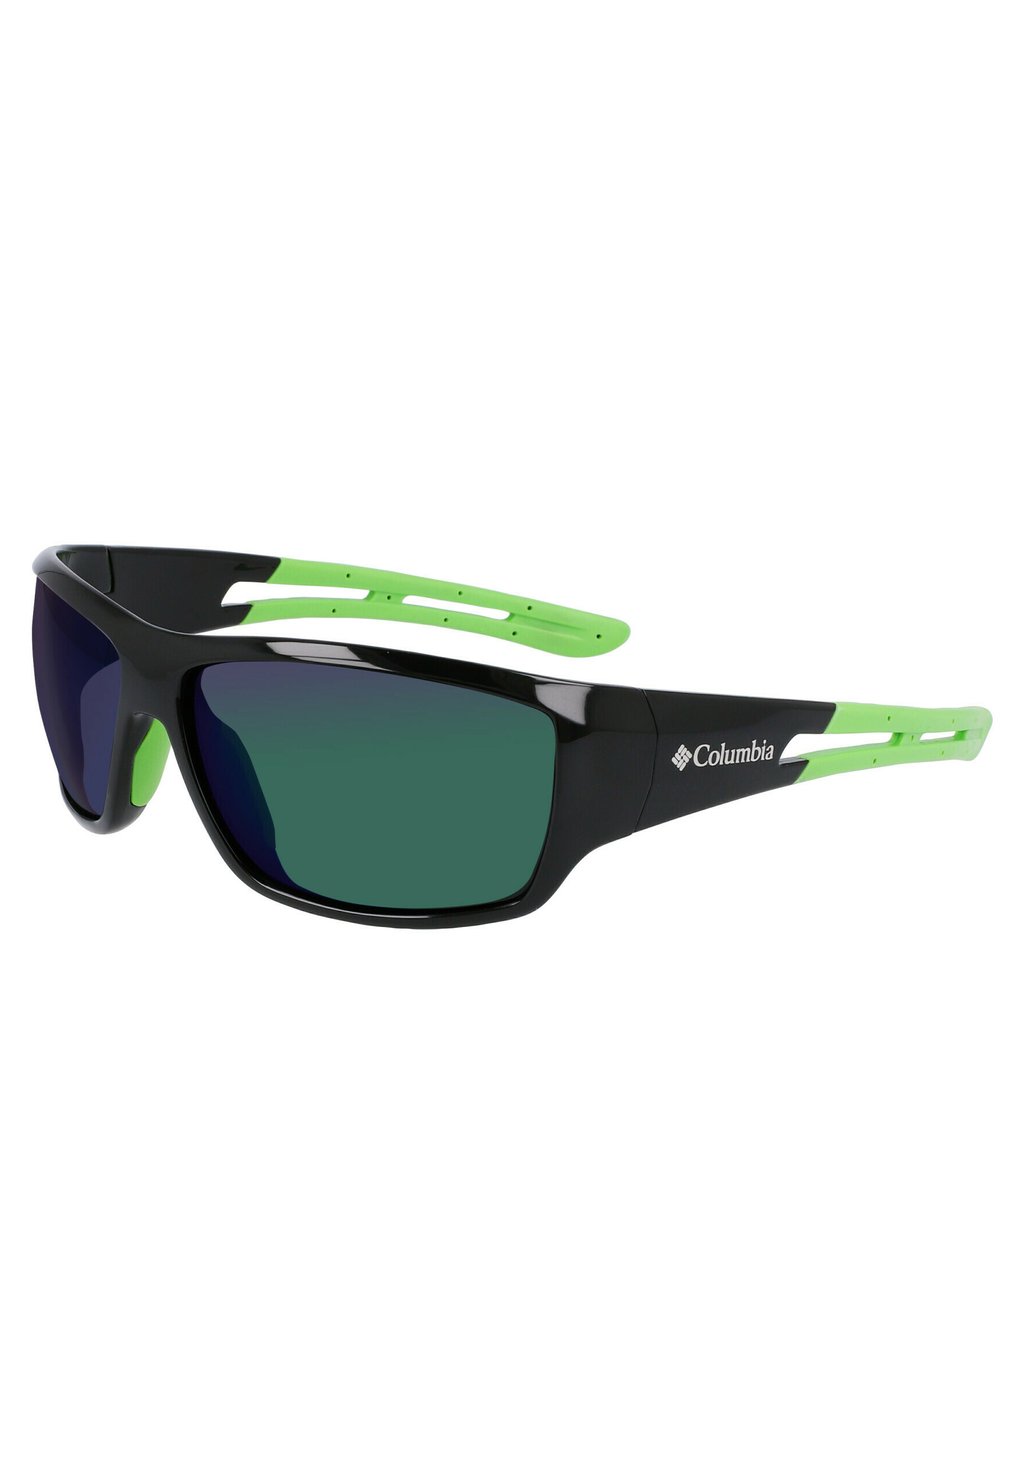 Солнцезащитные очки UTILIZER Columbia, цвет shiny black/green green mirr